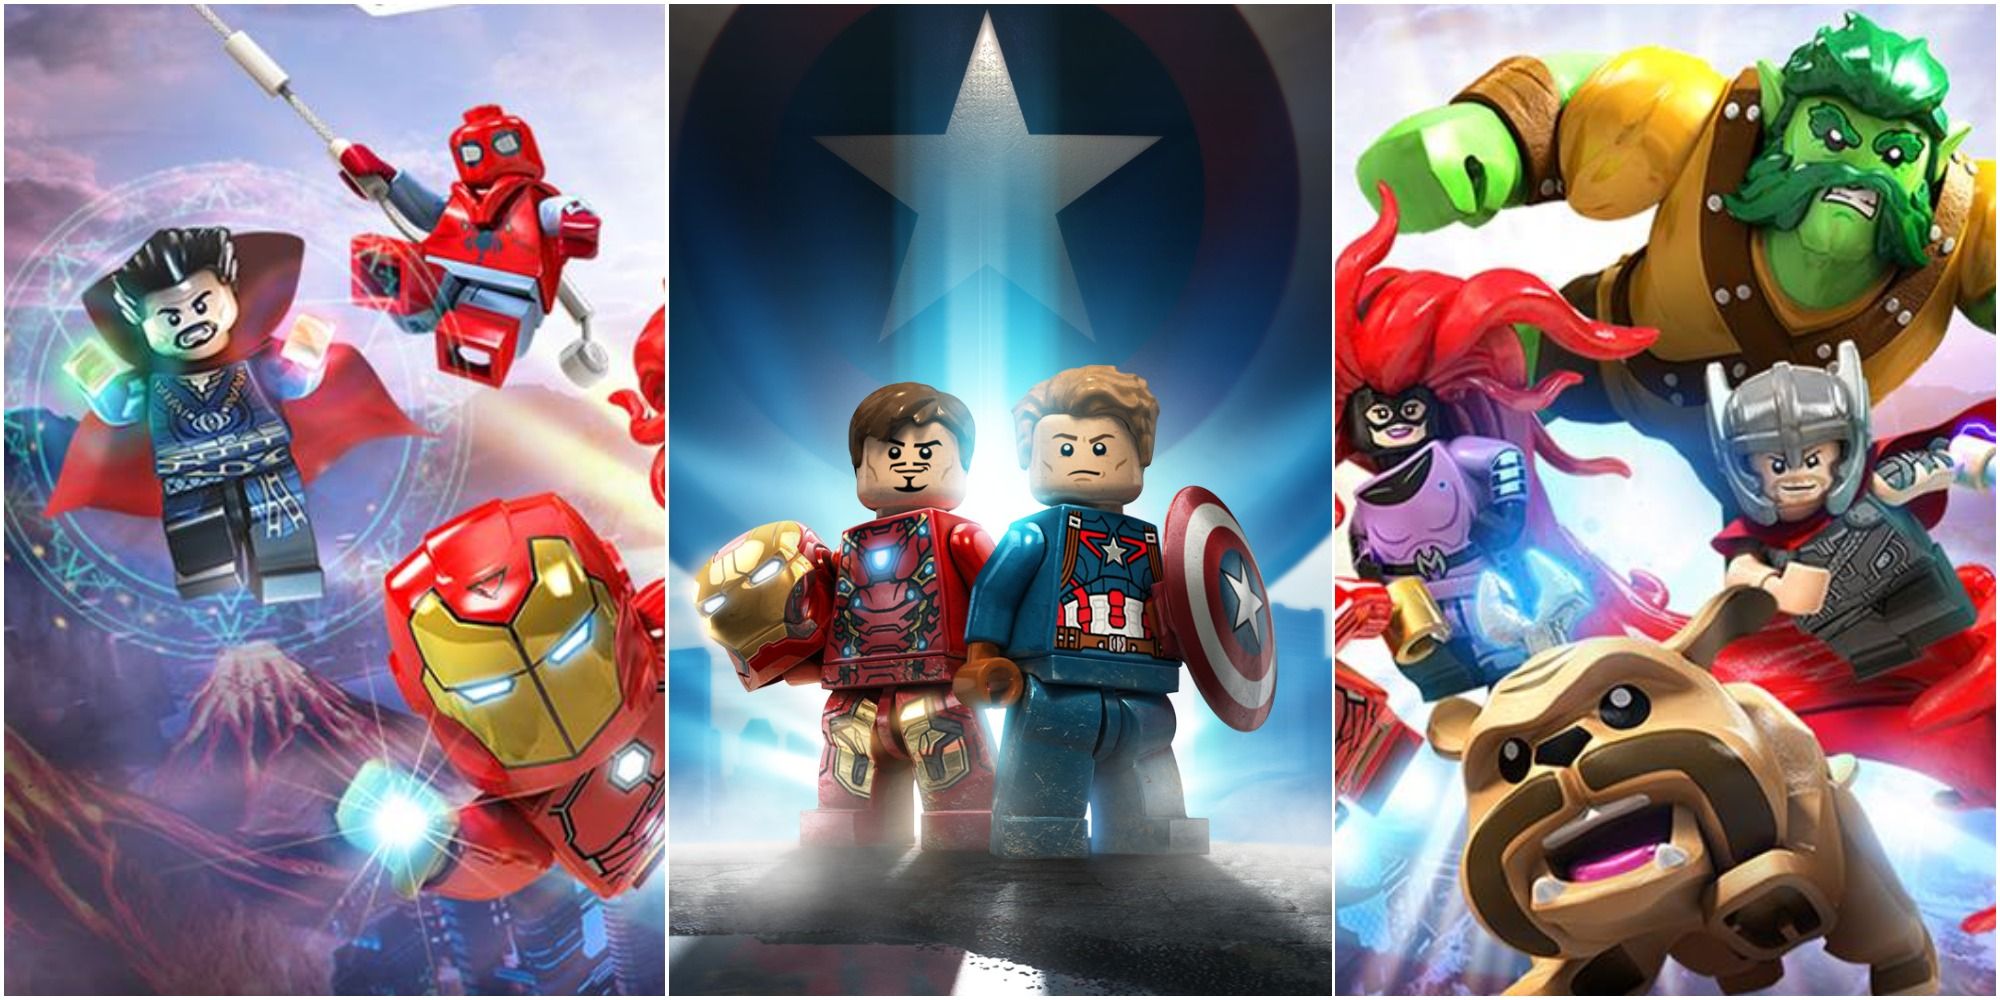 detekterbare vinkel Misforståelse 10 Ways The Avengers Are Different In The Lego Games